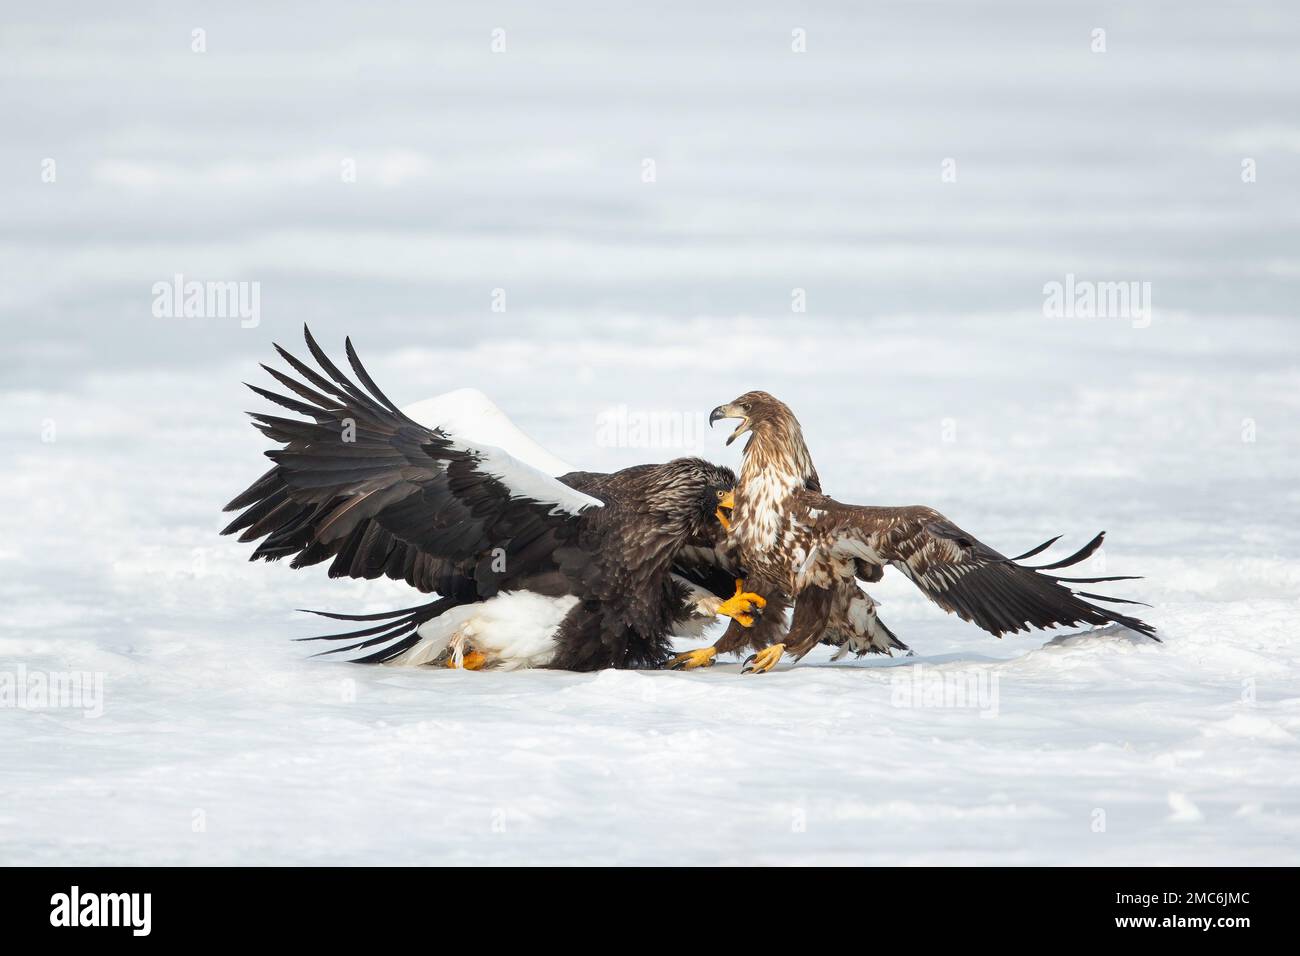 Steller's sea eagle (Haliaeetus pelagicus) and White-tailed Eagle (Haliaeetus albicilla) fighting on frozen lake, Hokkaido, Japan Stock Photo